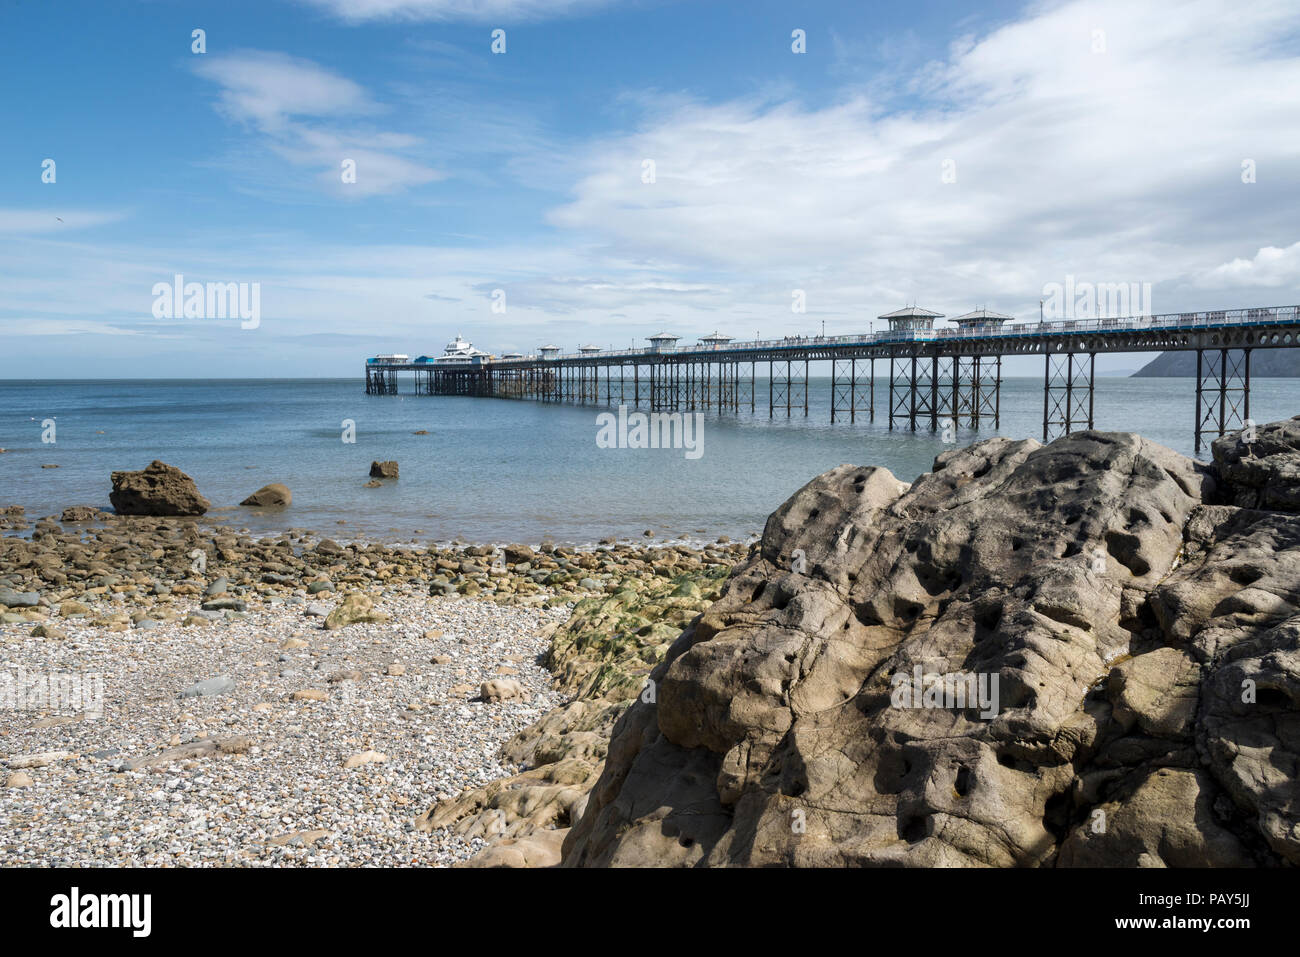 The historic Victorian pier at Llandudno on the coast of North Wales, UK. Stock Photo